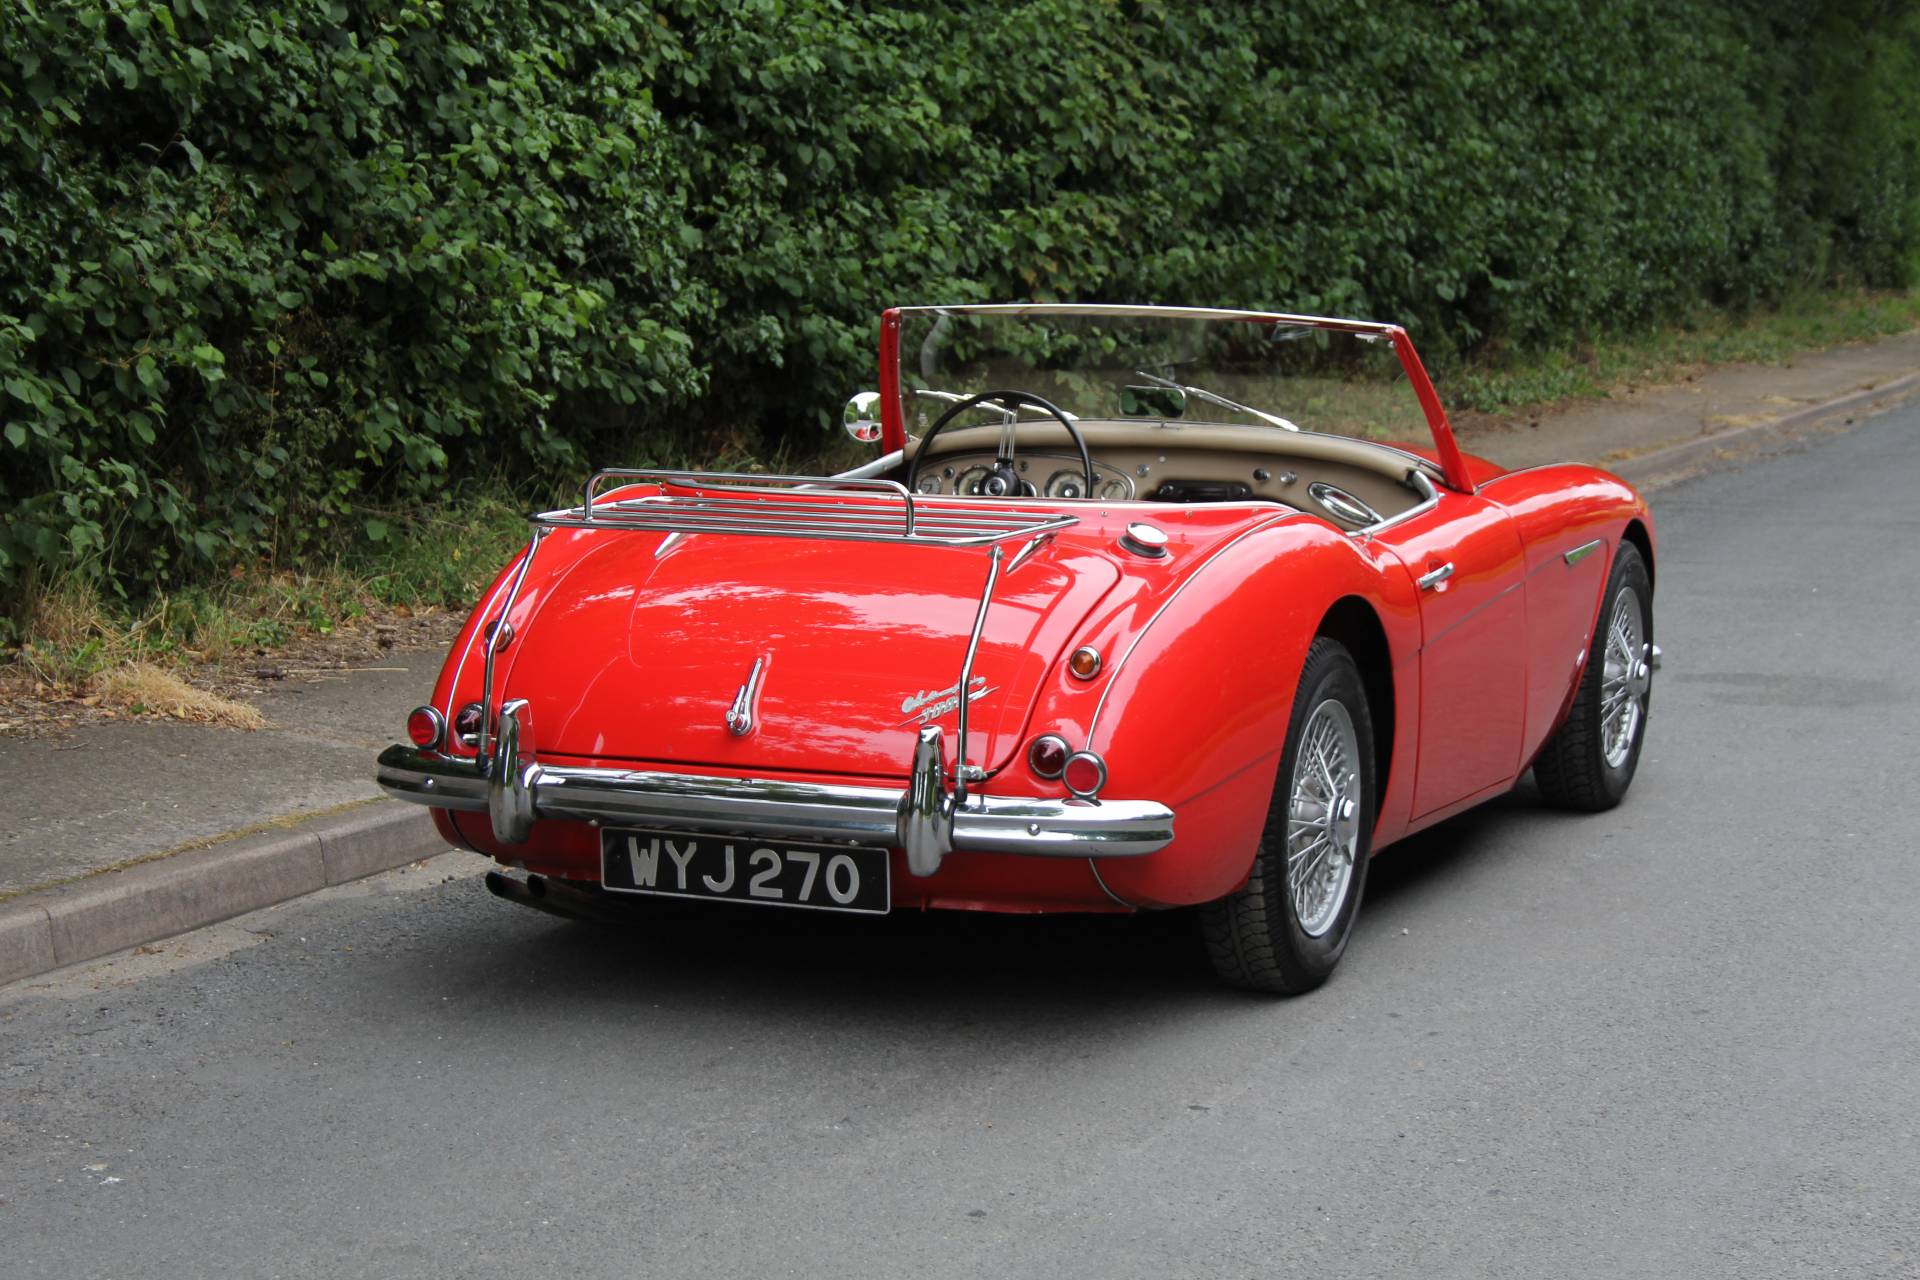 For Sale: Austin-Healey 3000 Mk I (BN7) (1959) offered for GBP 54,995